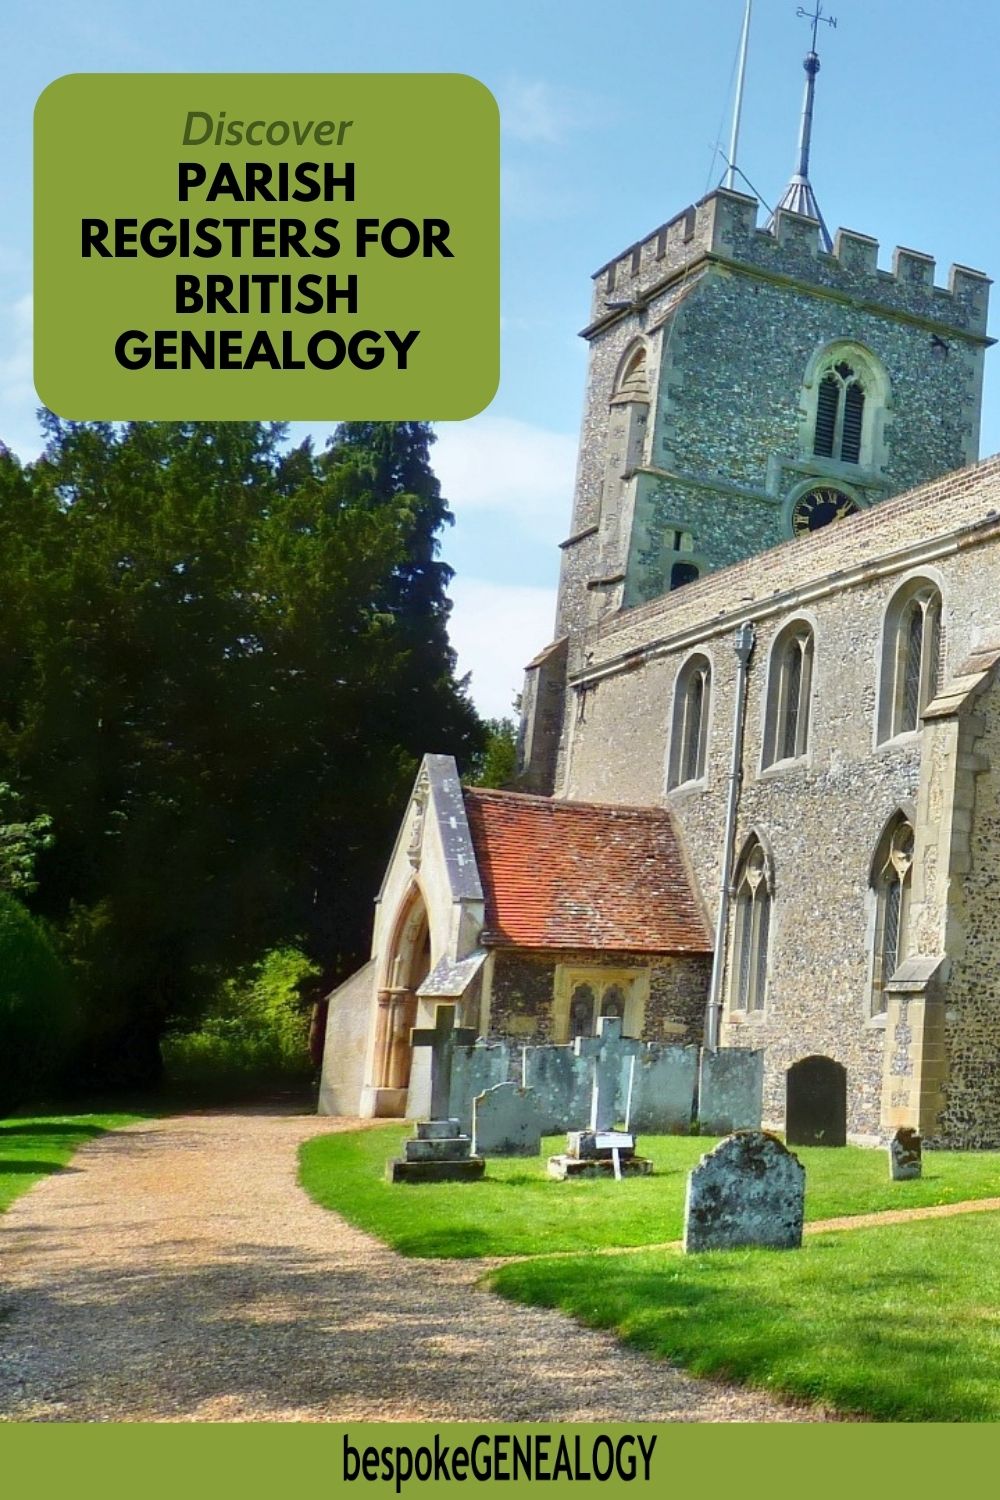 Discover parish registers for British genealogy. Photo of a British parish church.